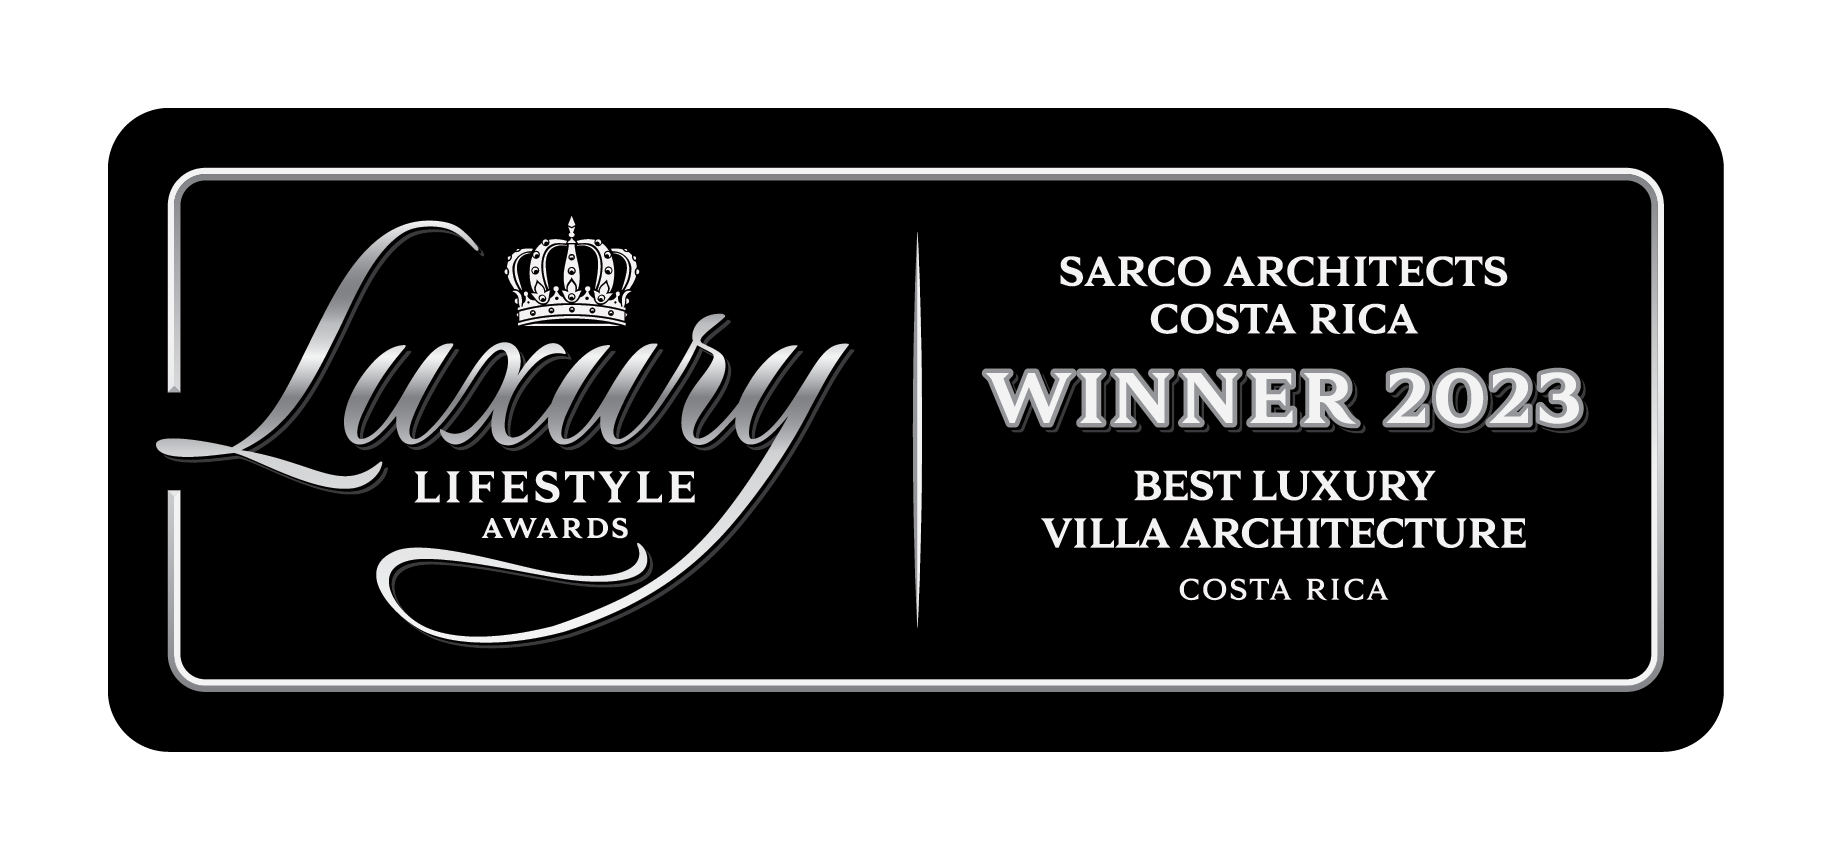 Luxury Lifestyle Awards, SARCO Architects Costa Rica  - WINNER 2023 - Best Luxury Villa Architecture, Costa Rica - banner graphic